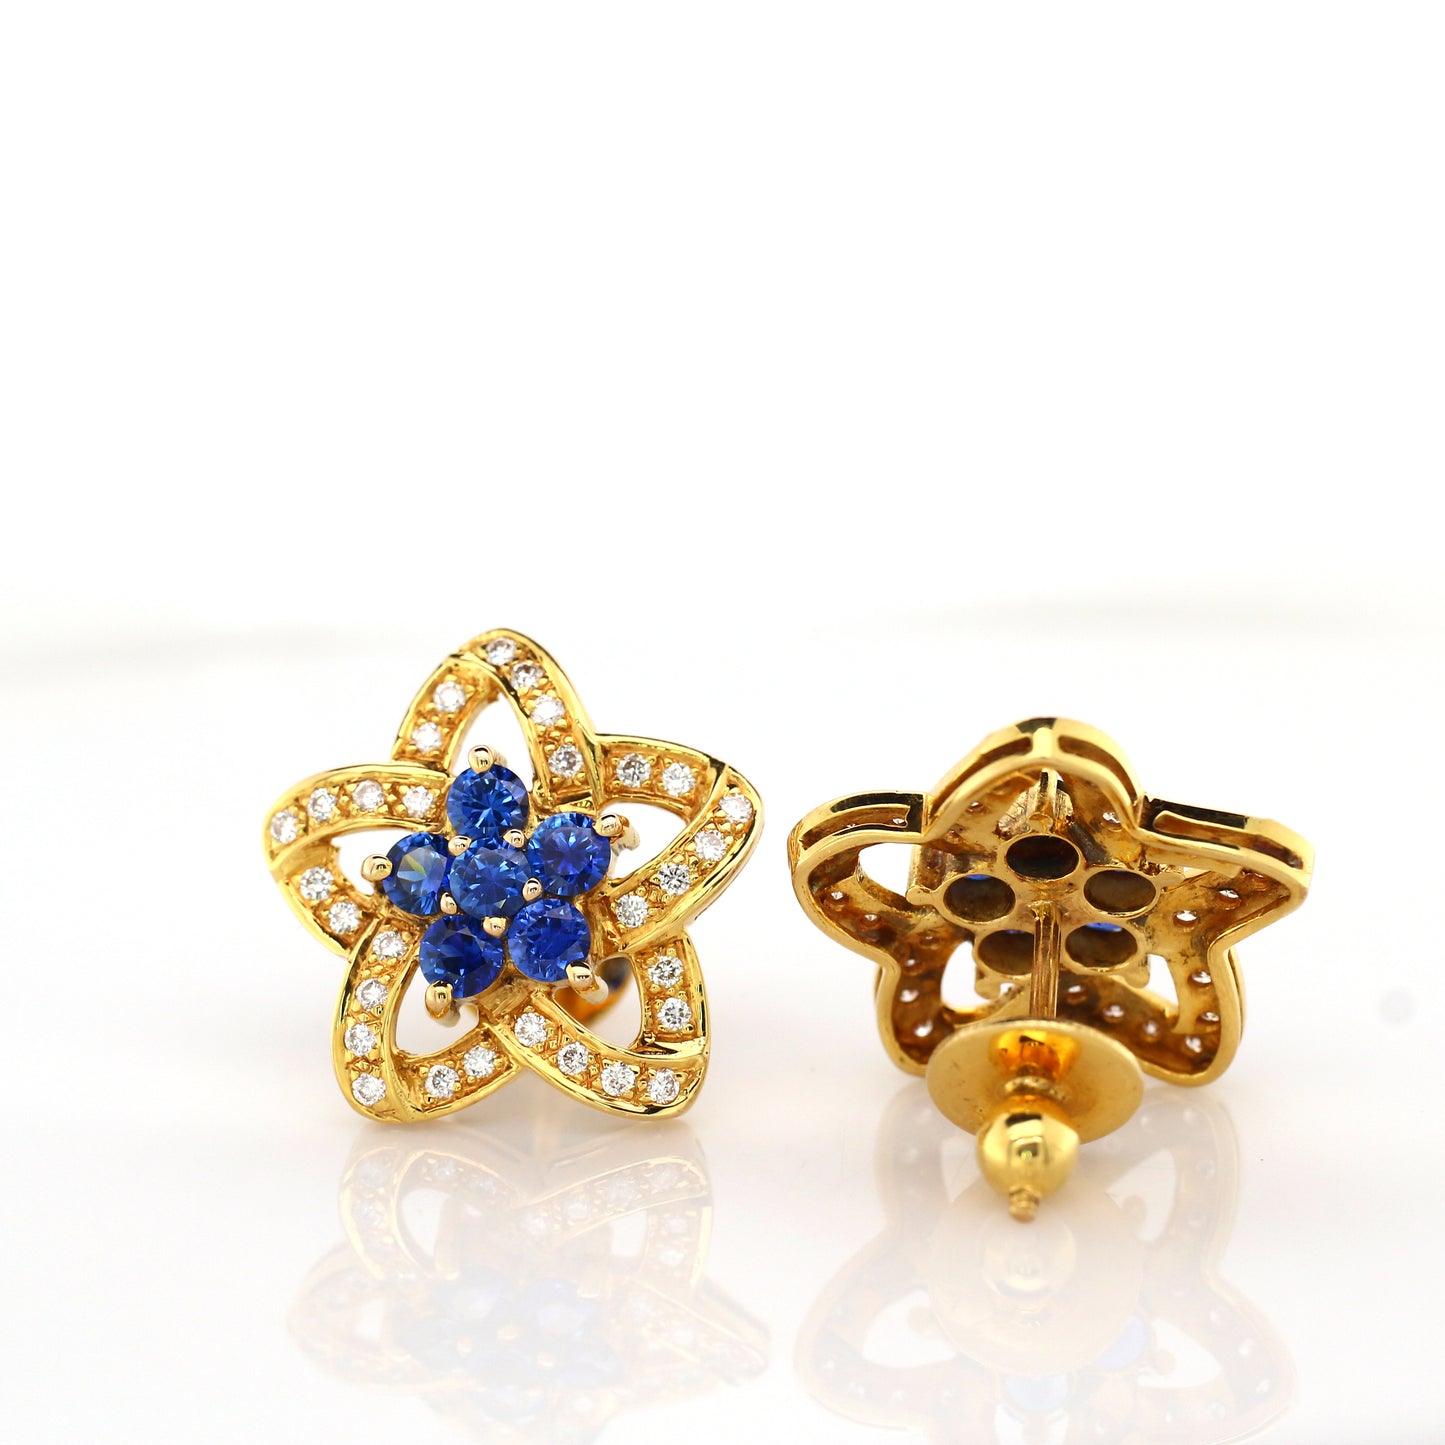 Blue Sapphire & Diamond Earring - 18k Yellow Gold 8.98 gm